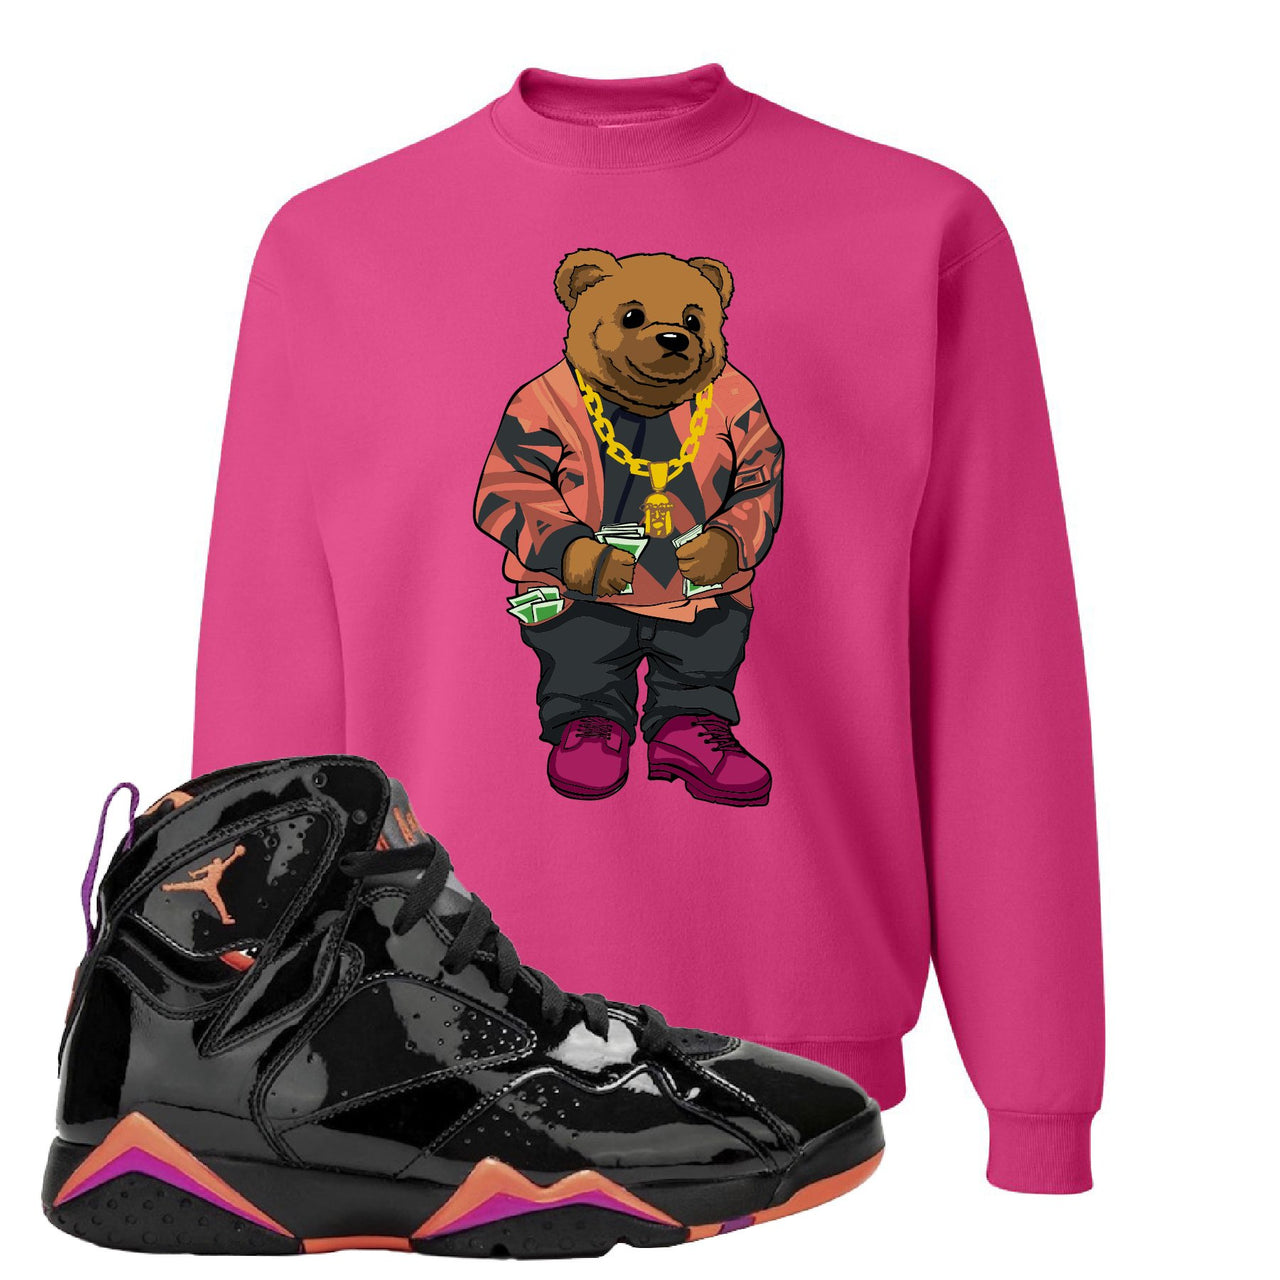 Jordan 7 WMNS Black Patent Leather Sweater Bear Cyber Pink Sneaker Hook Up Crewneck Sweatshirt